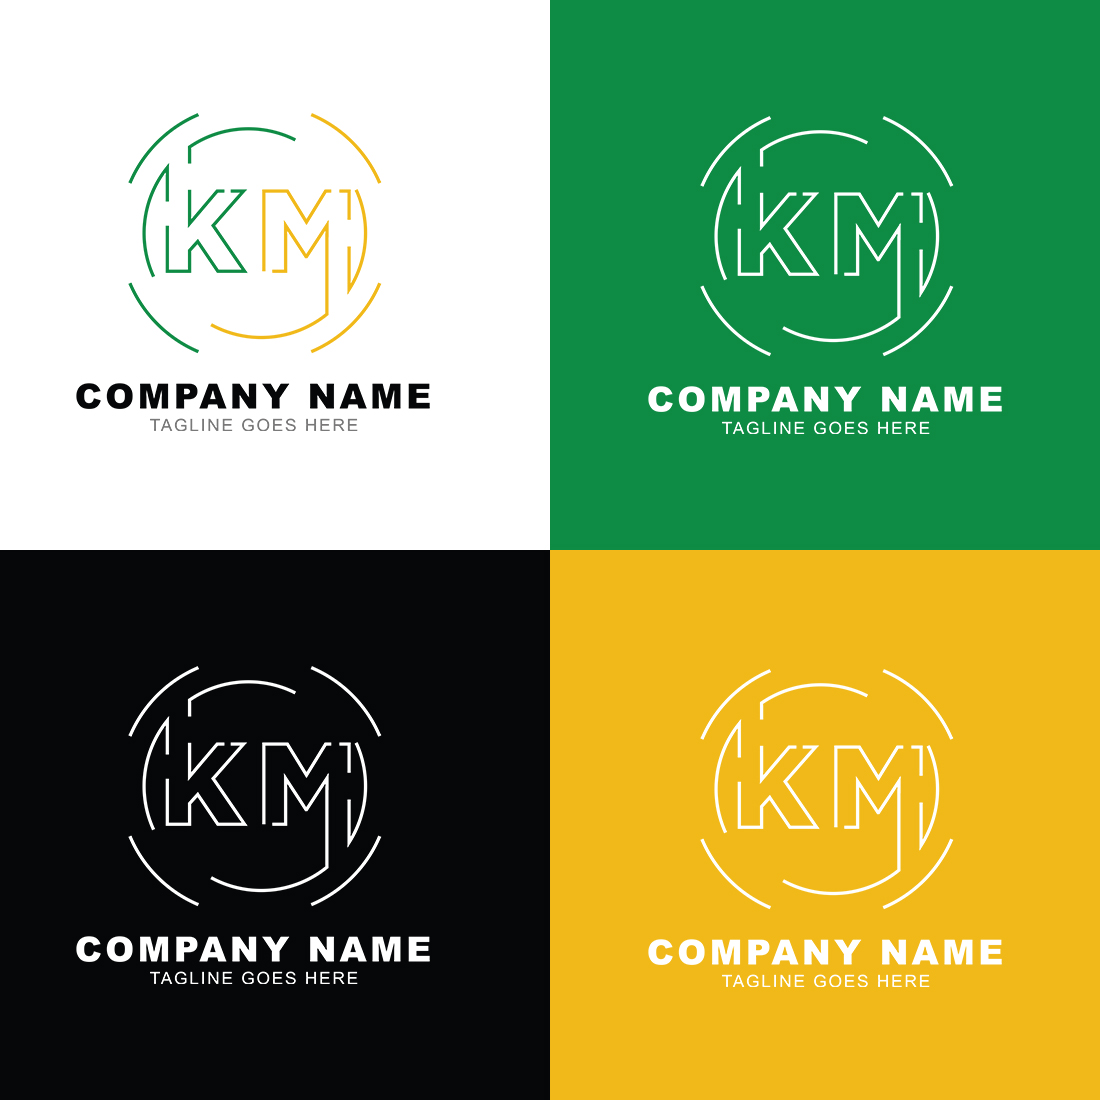 Letter (K&M) Lettermark Logo Design For Business – Just $20 preview image.